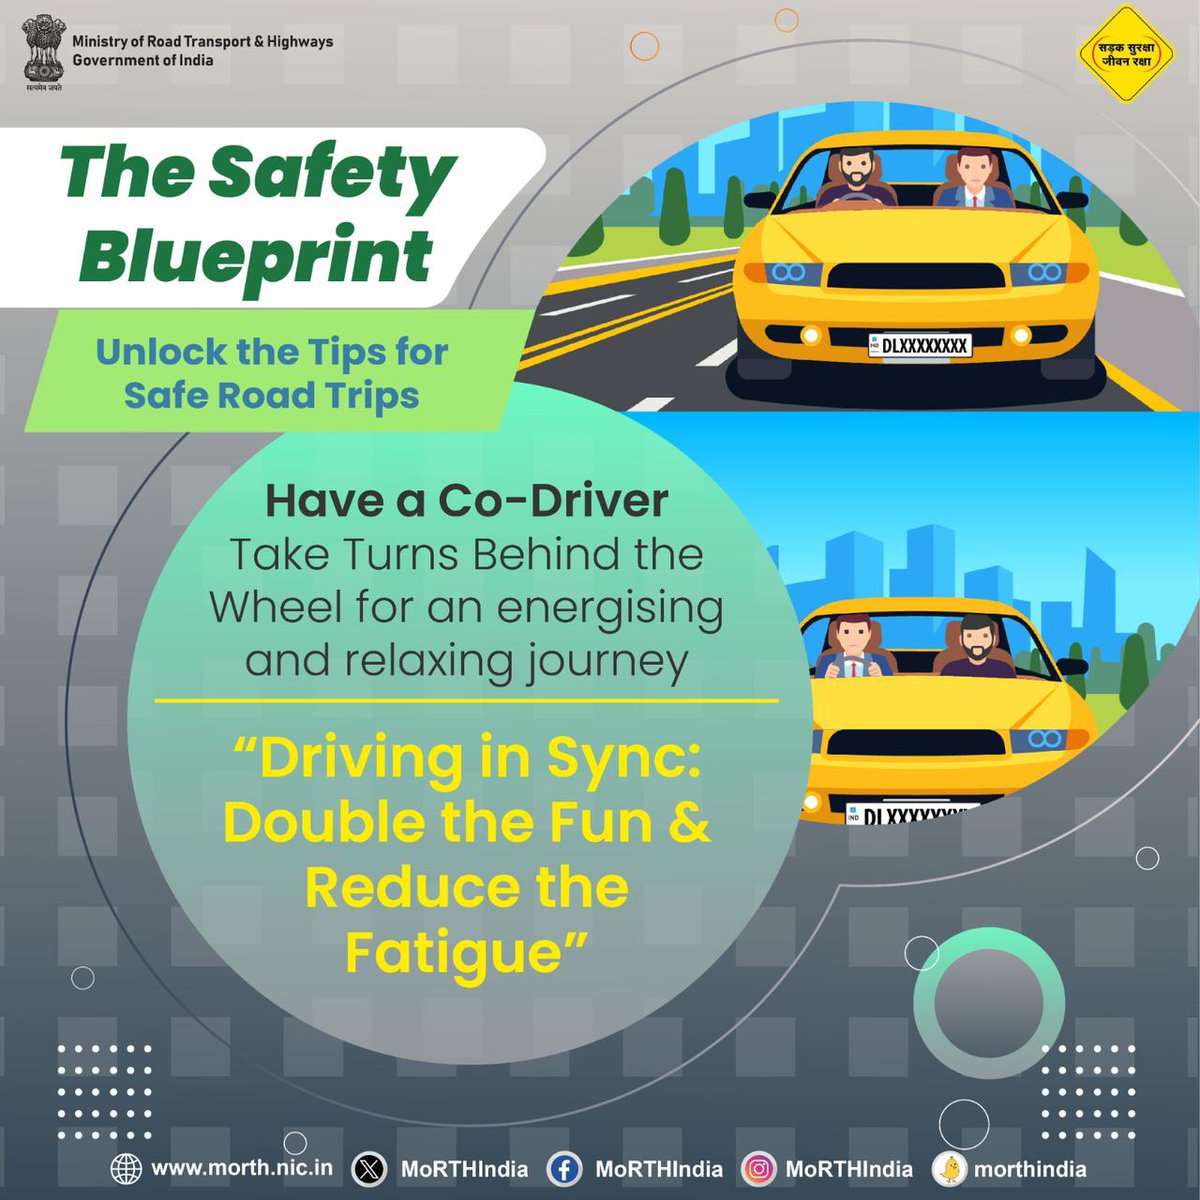 The Safety Blueprint #SadakSurakshaJeevanRaksha #DriveResponsibly

Via @MORTHIndia